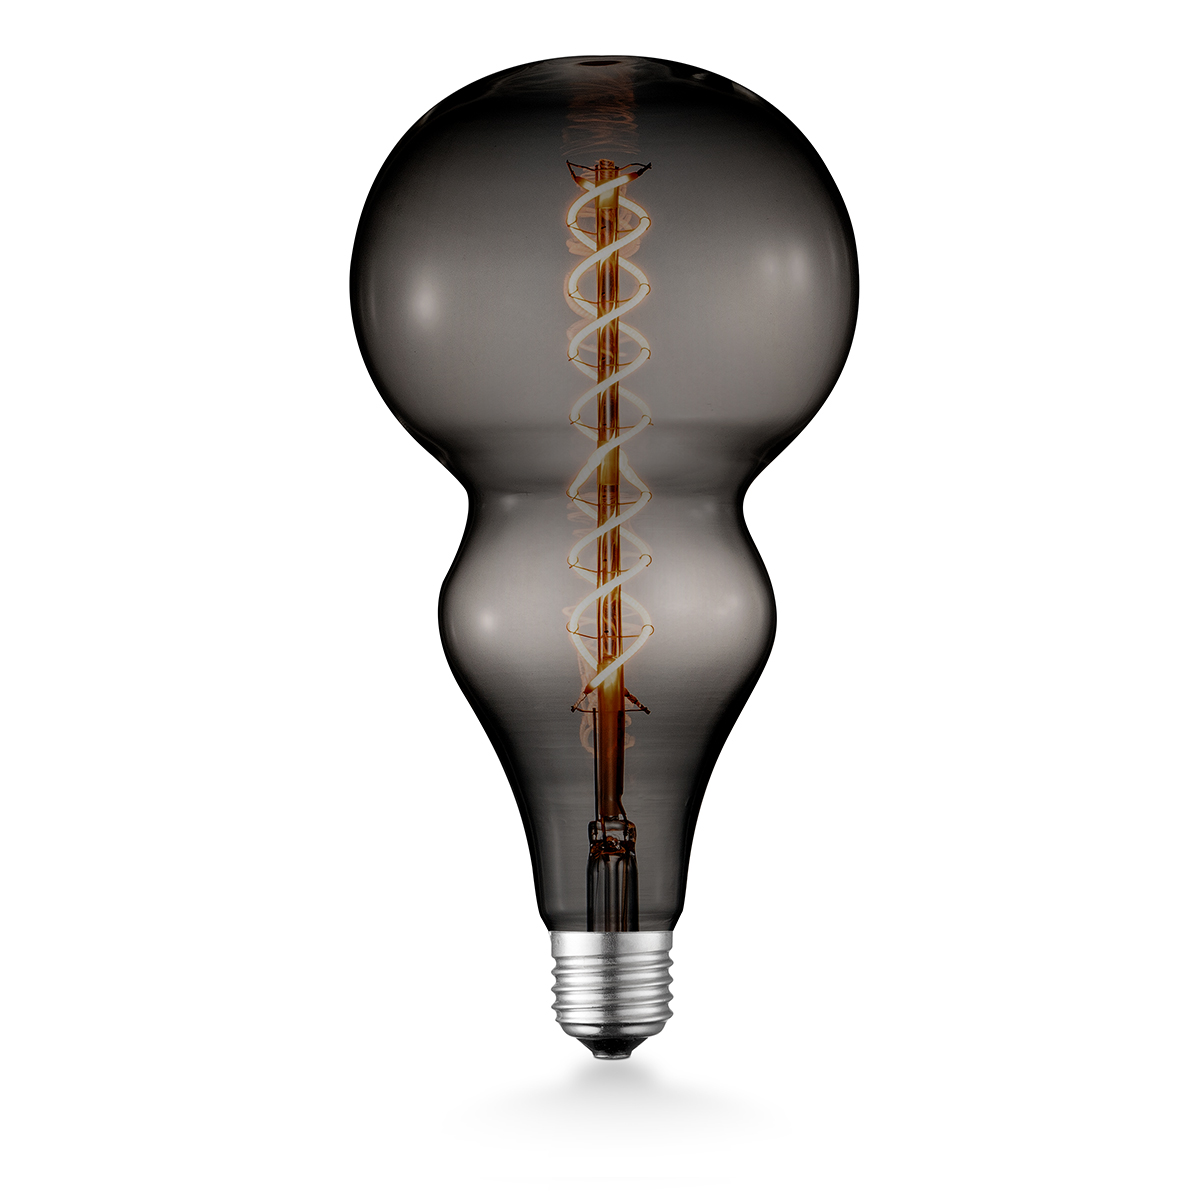 Tangla lighting - TLB-8040-06TM - LED Light Bulb Double Spiral filament - special 4W titanium - medium - bottle - dimmable - E27